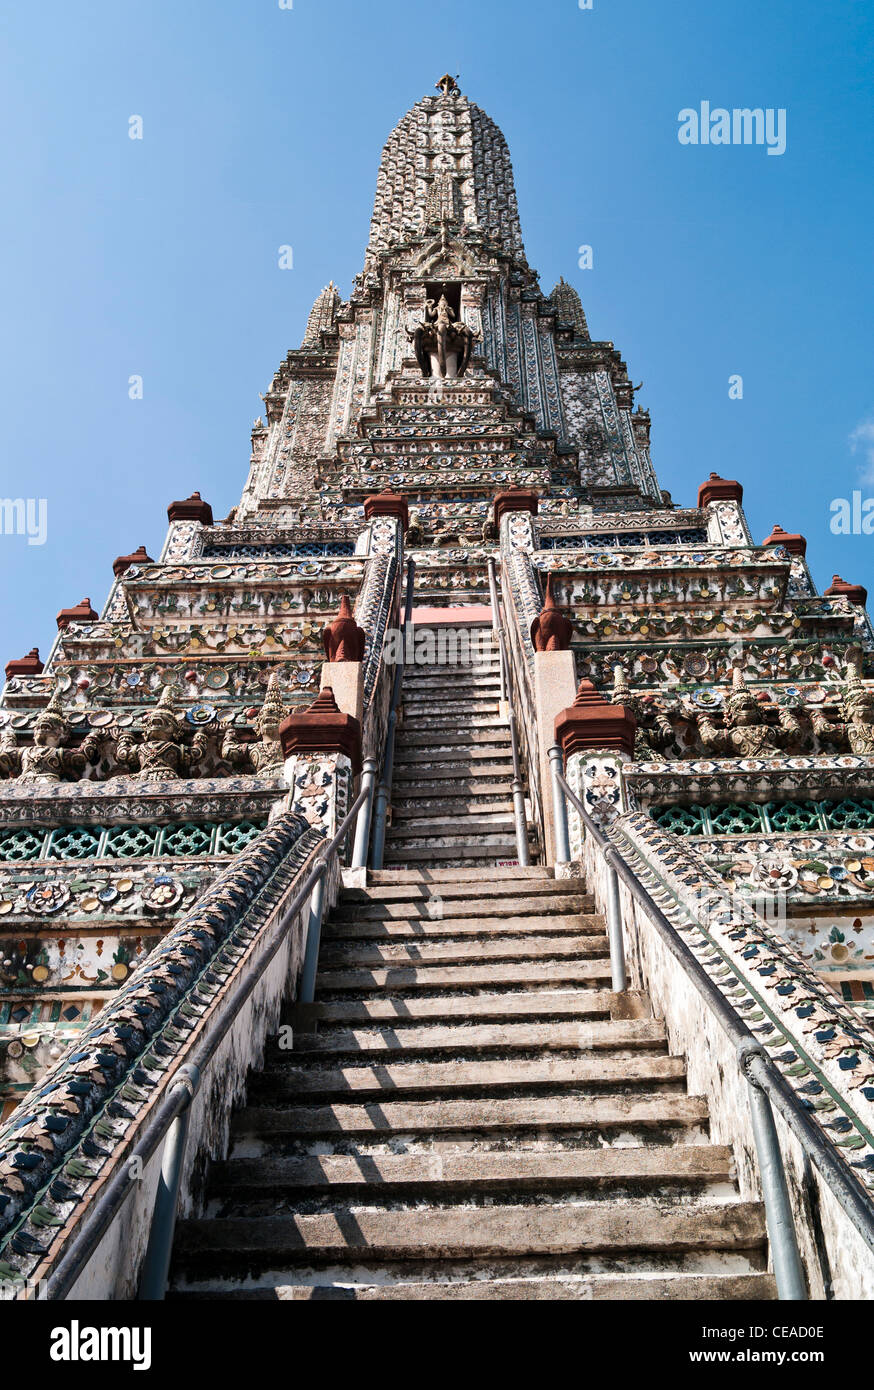 Wat Arun Temple, or the Temple of the Dawn, Bangkok, Thailand. Stock Photo